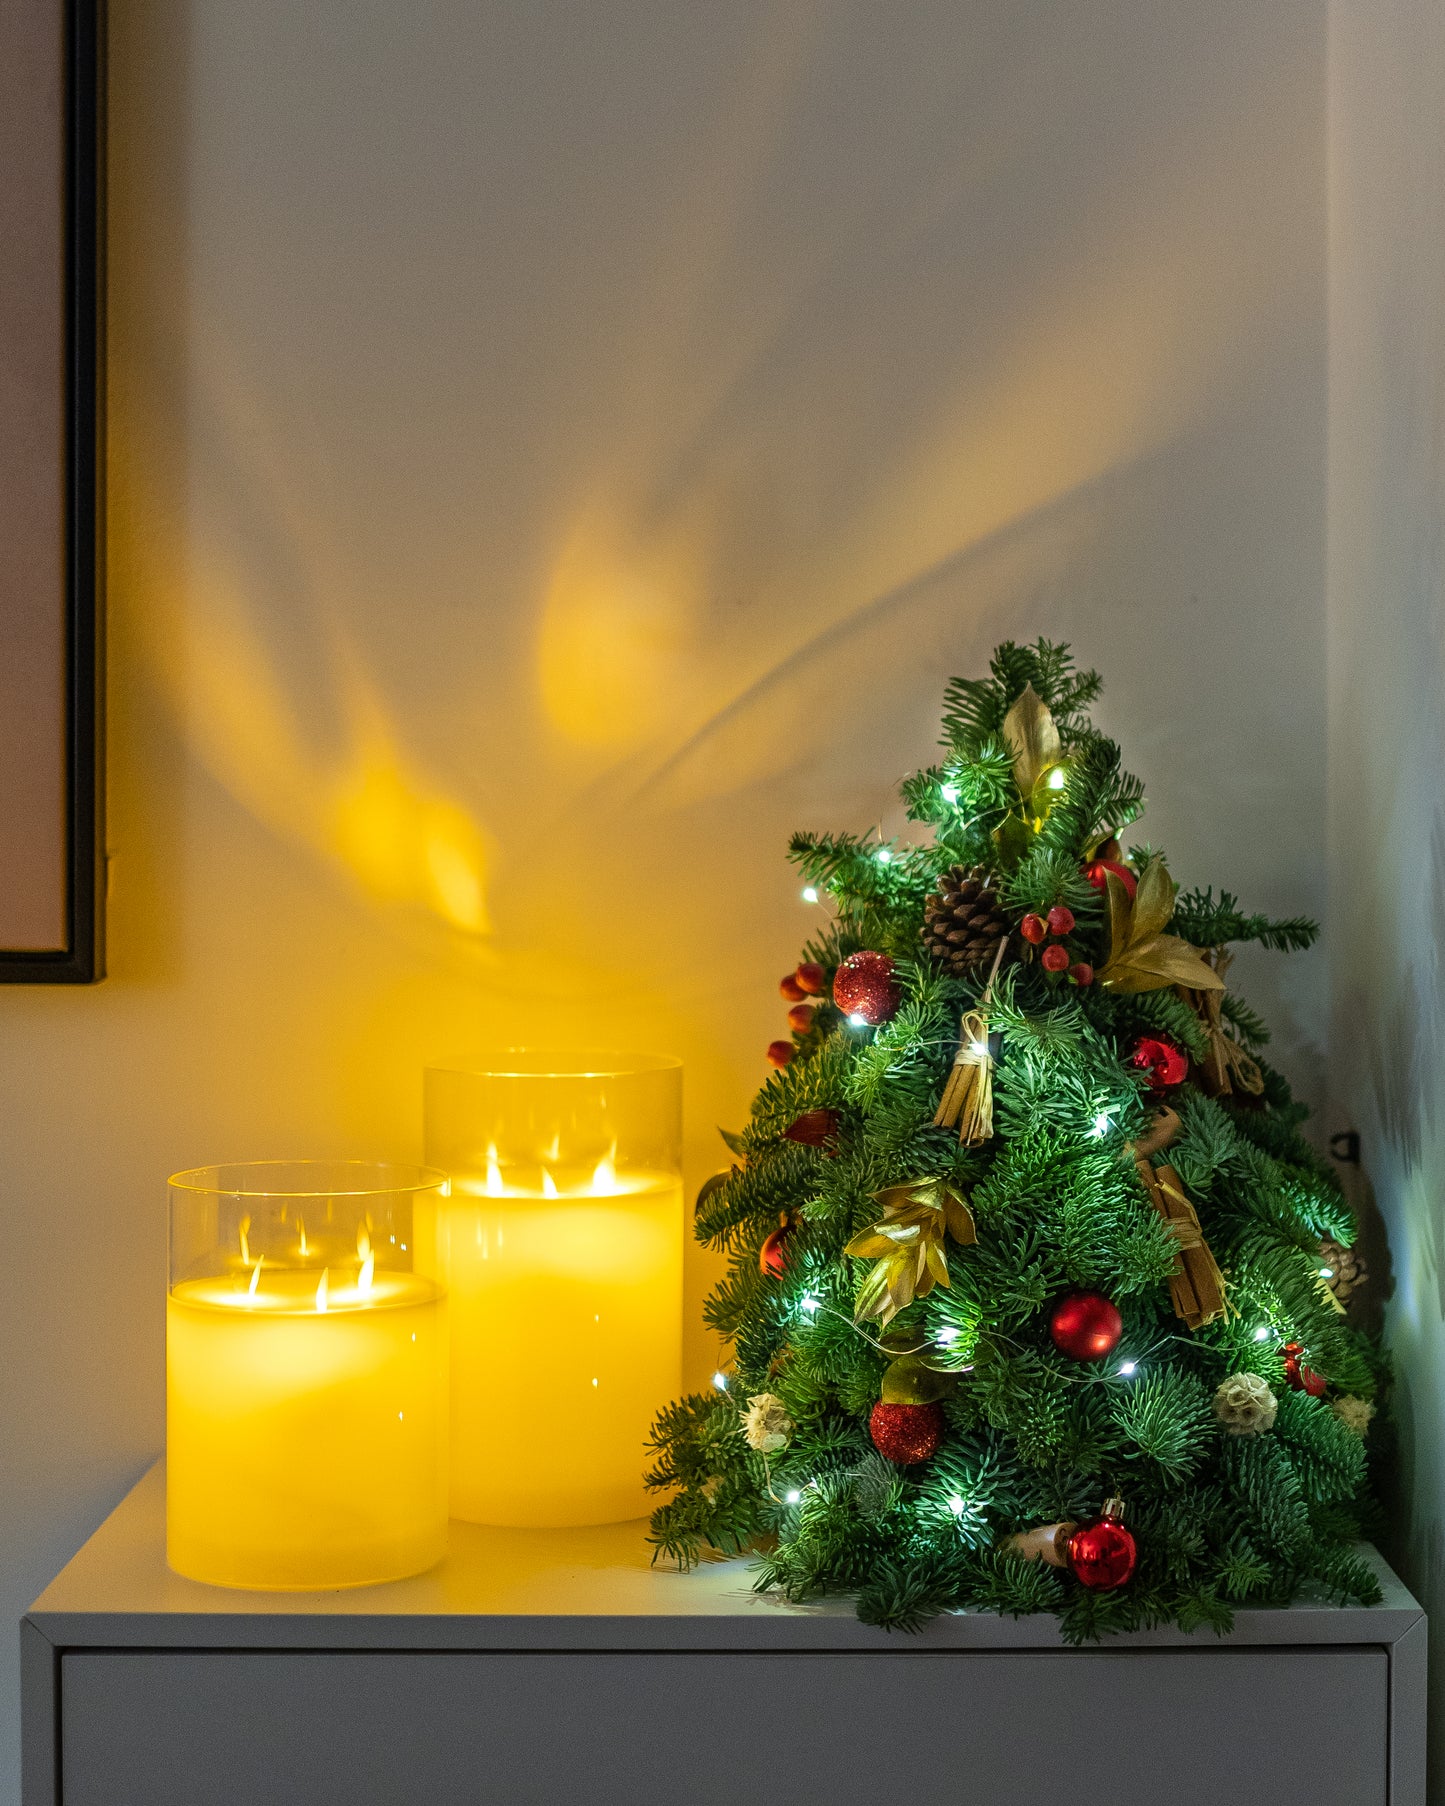 The Christmas Bliss Mini Tree